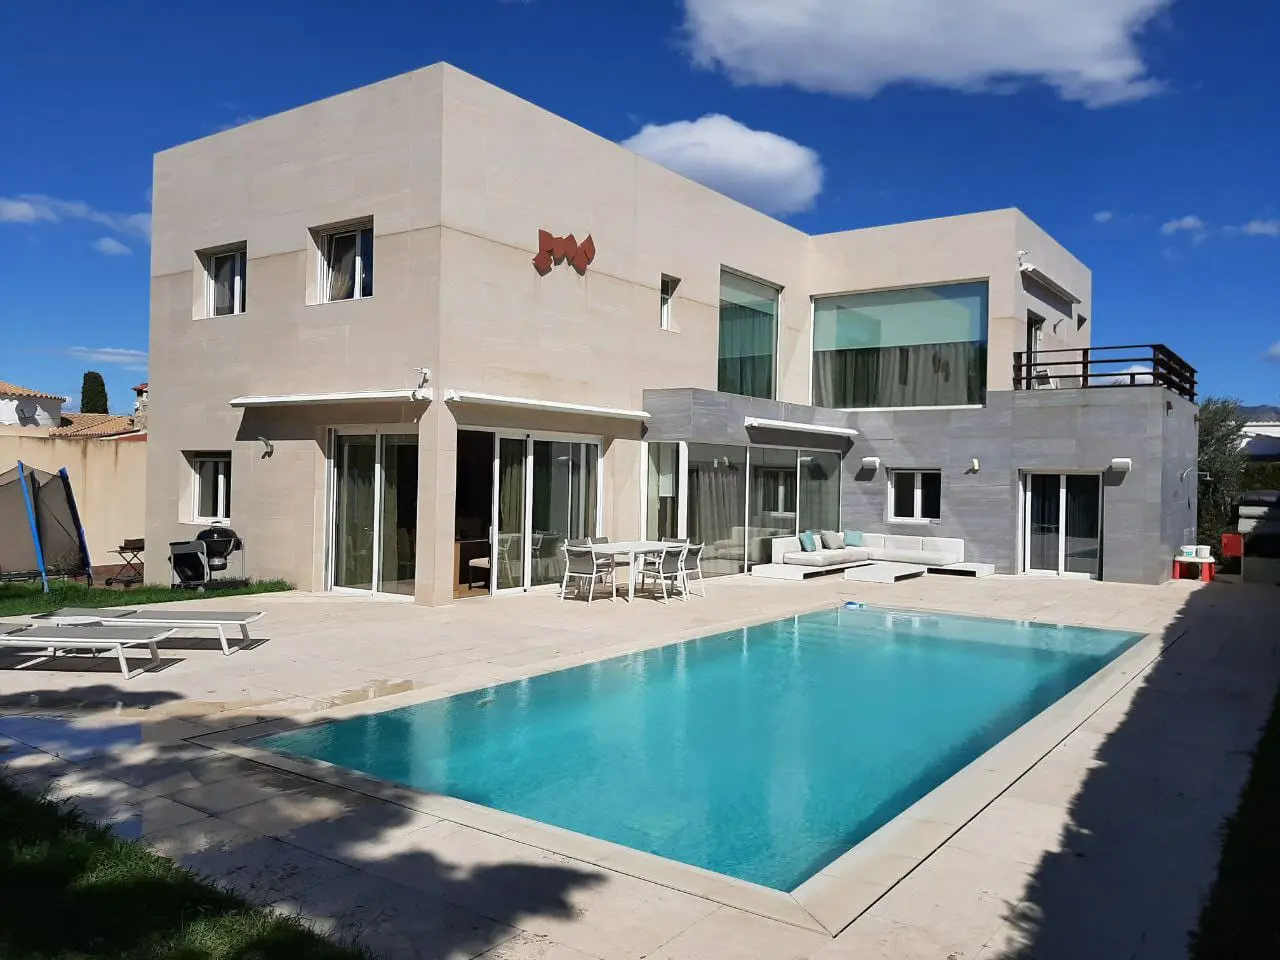 Gran casa moderna con piscina en el centro